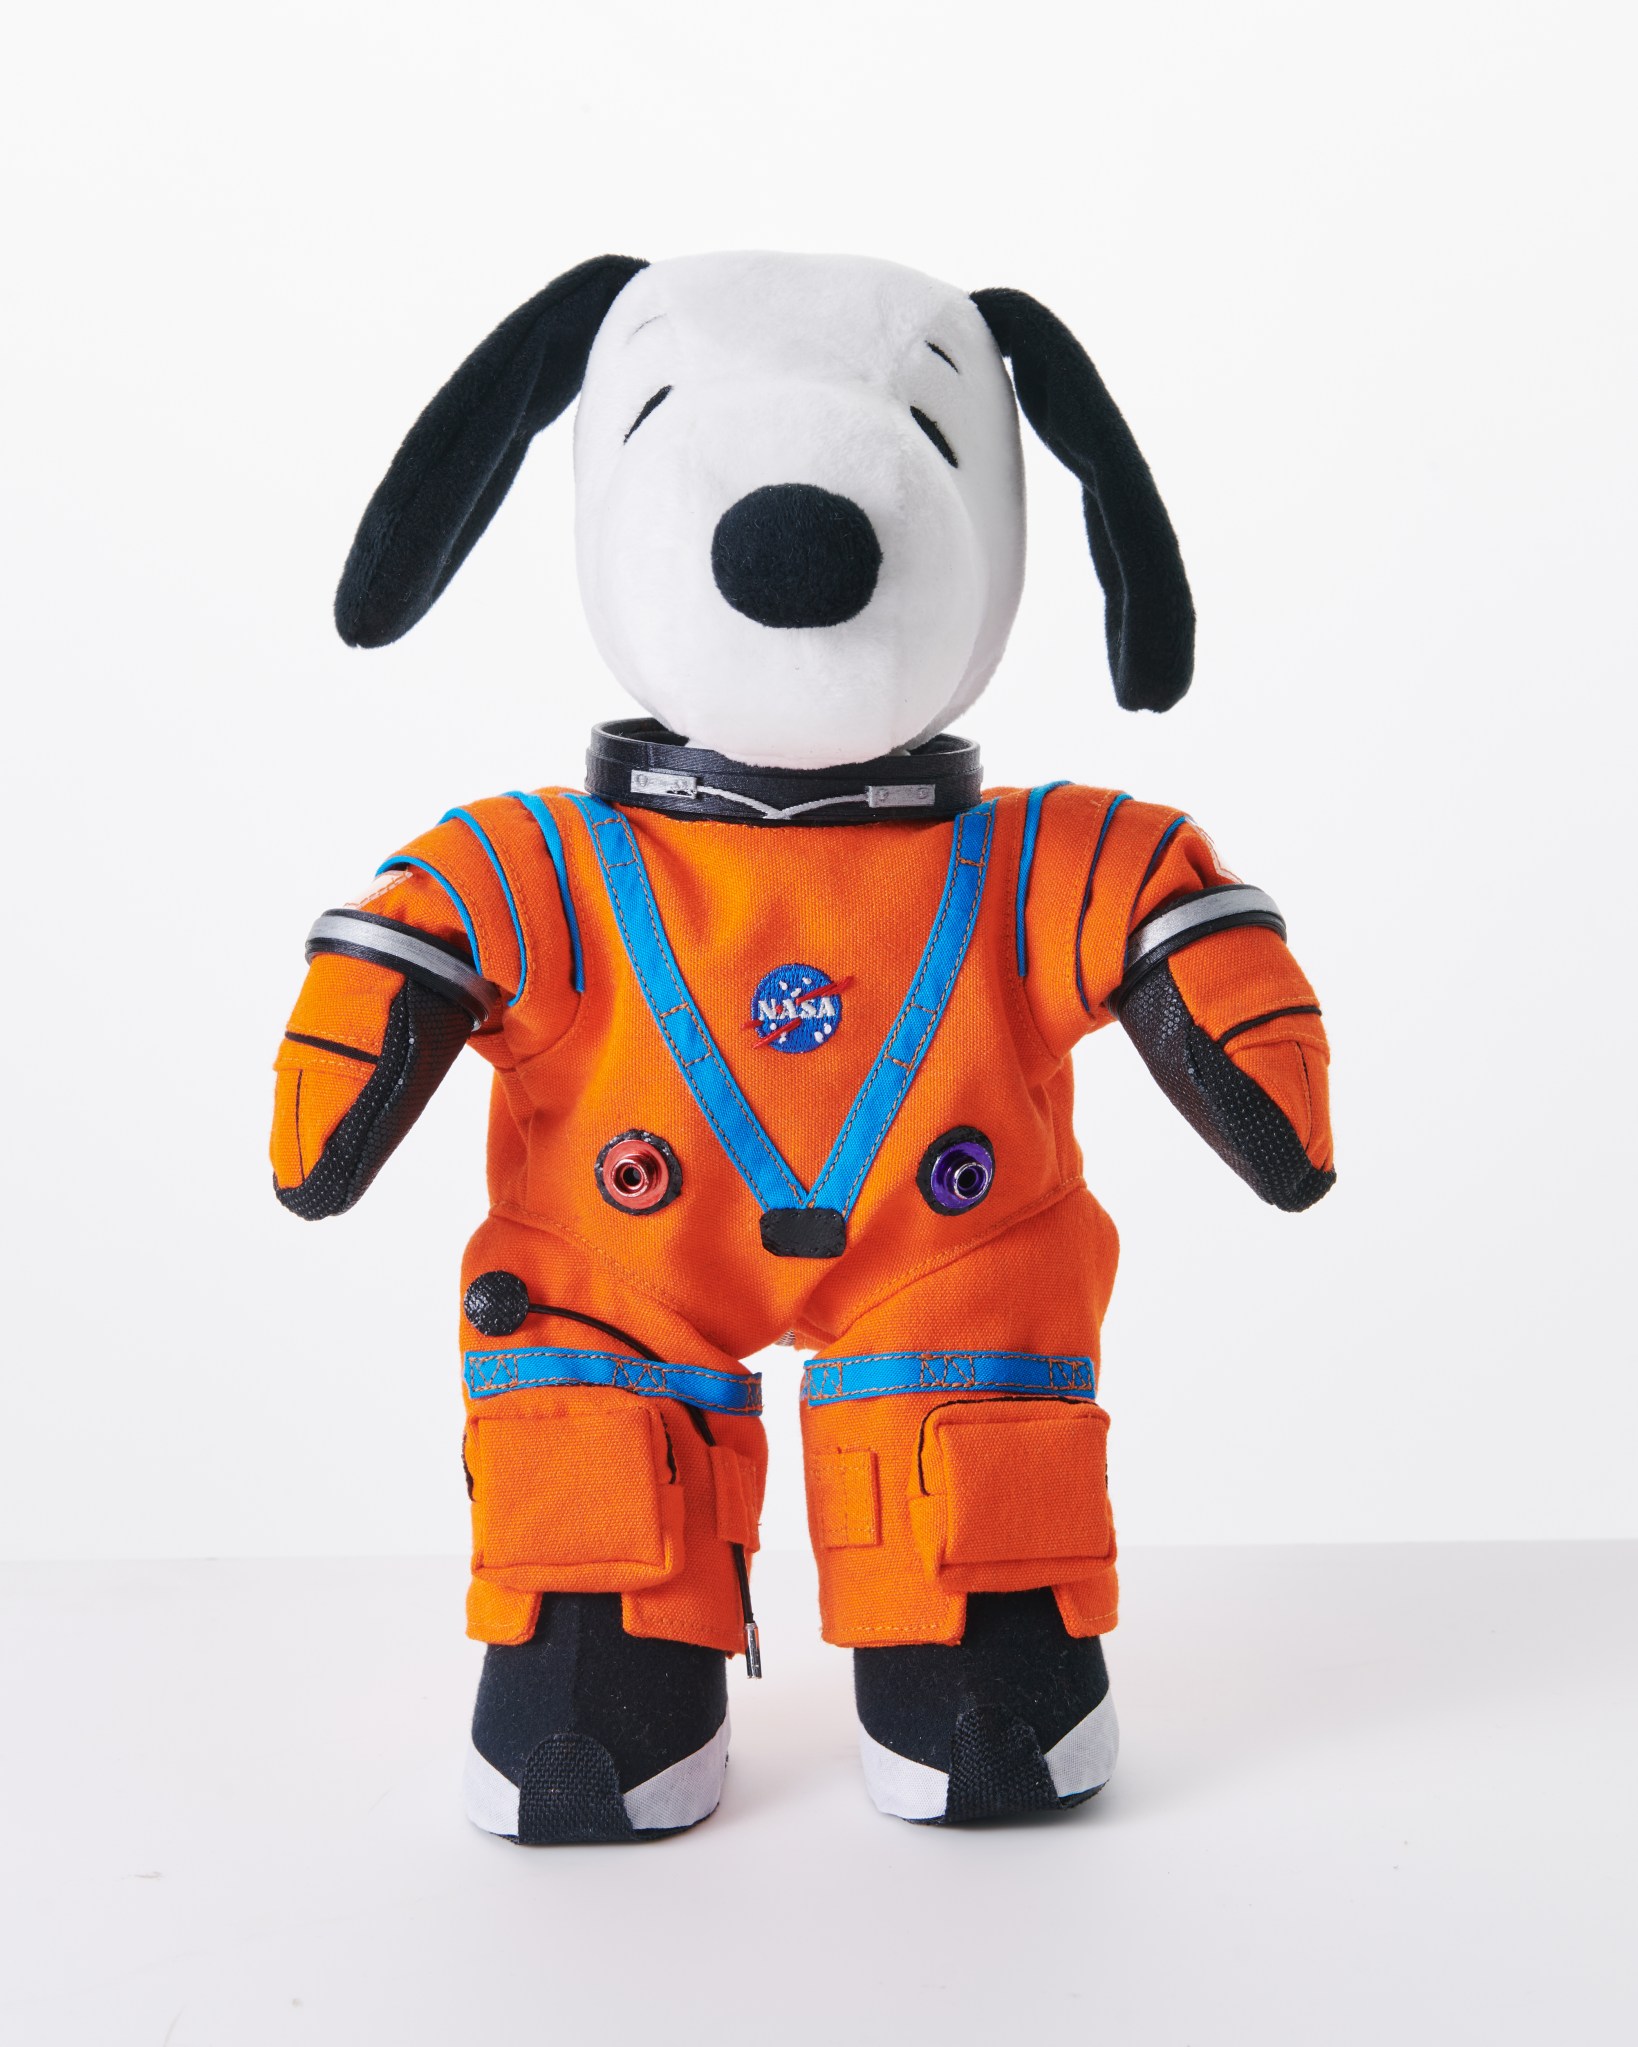 Snoopy as a zero gravity indicator